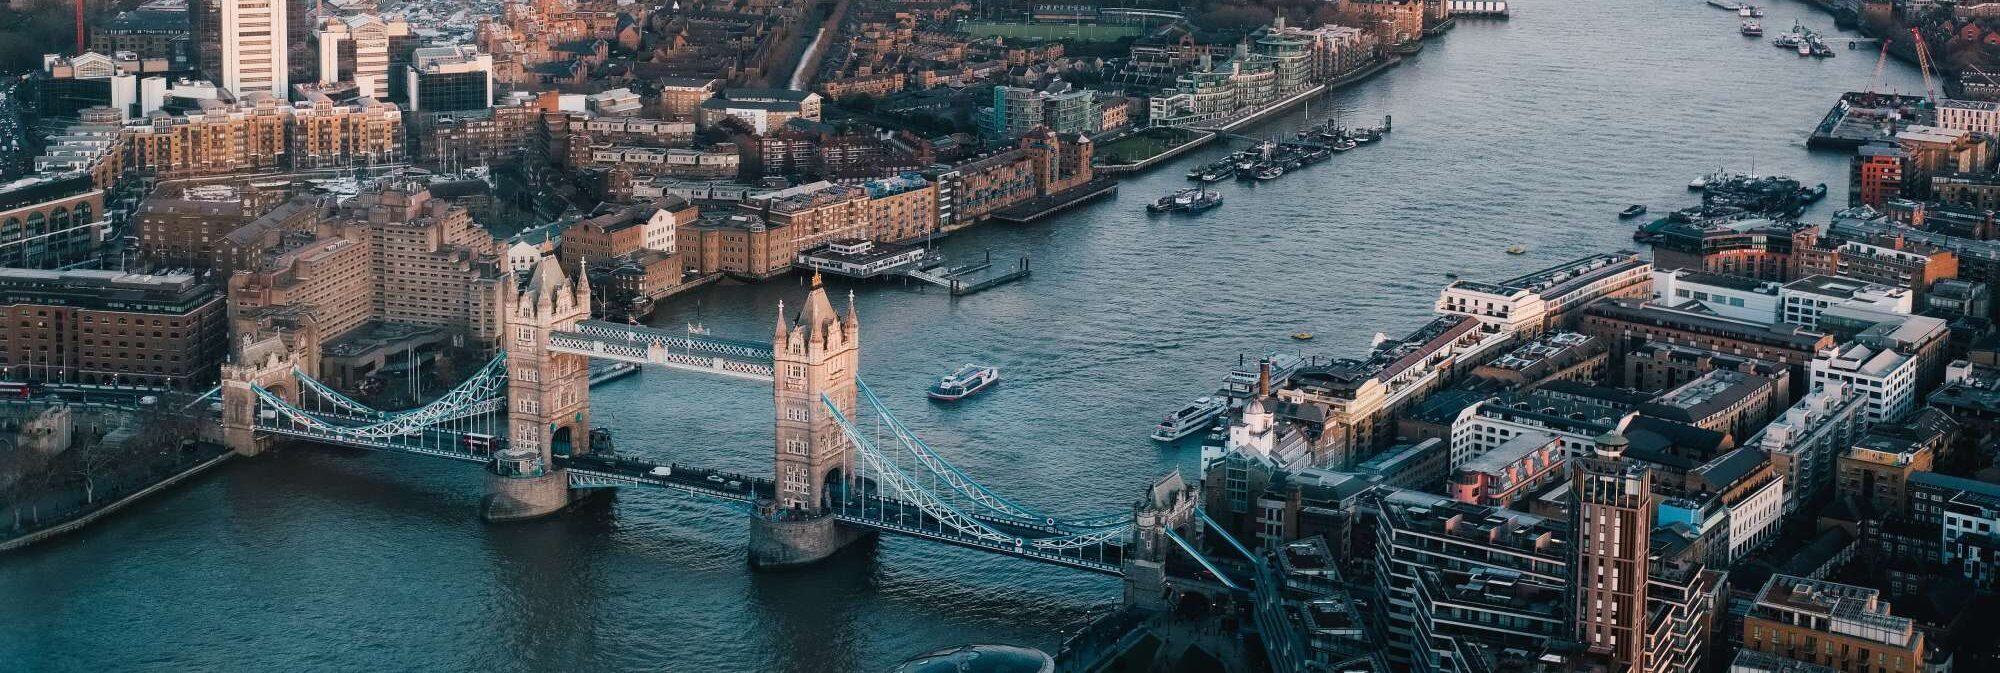 Tower bridge in London